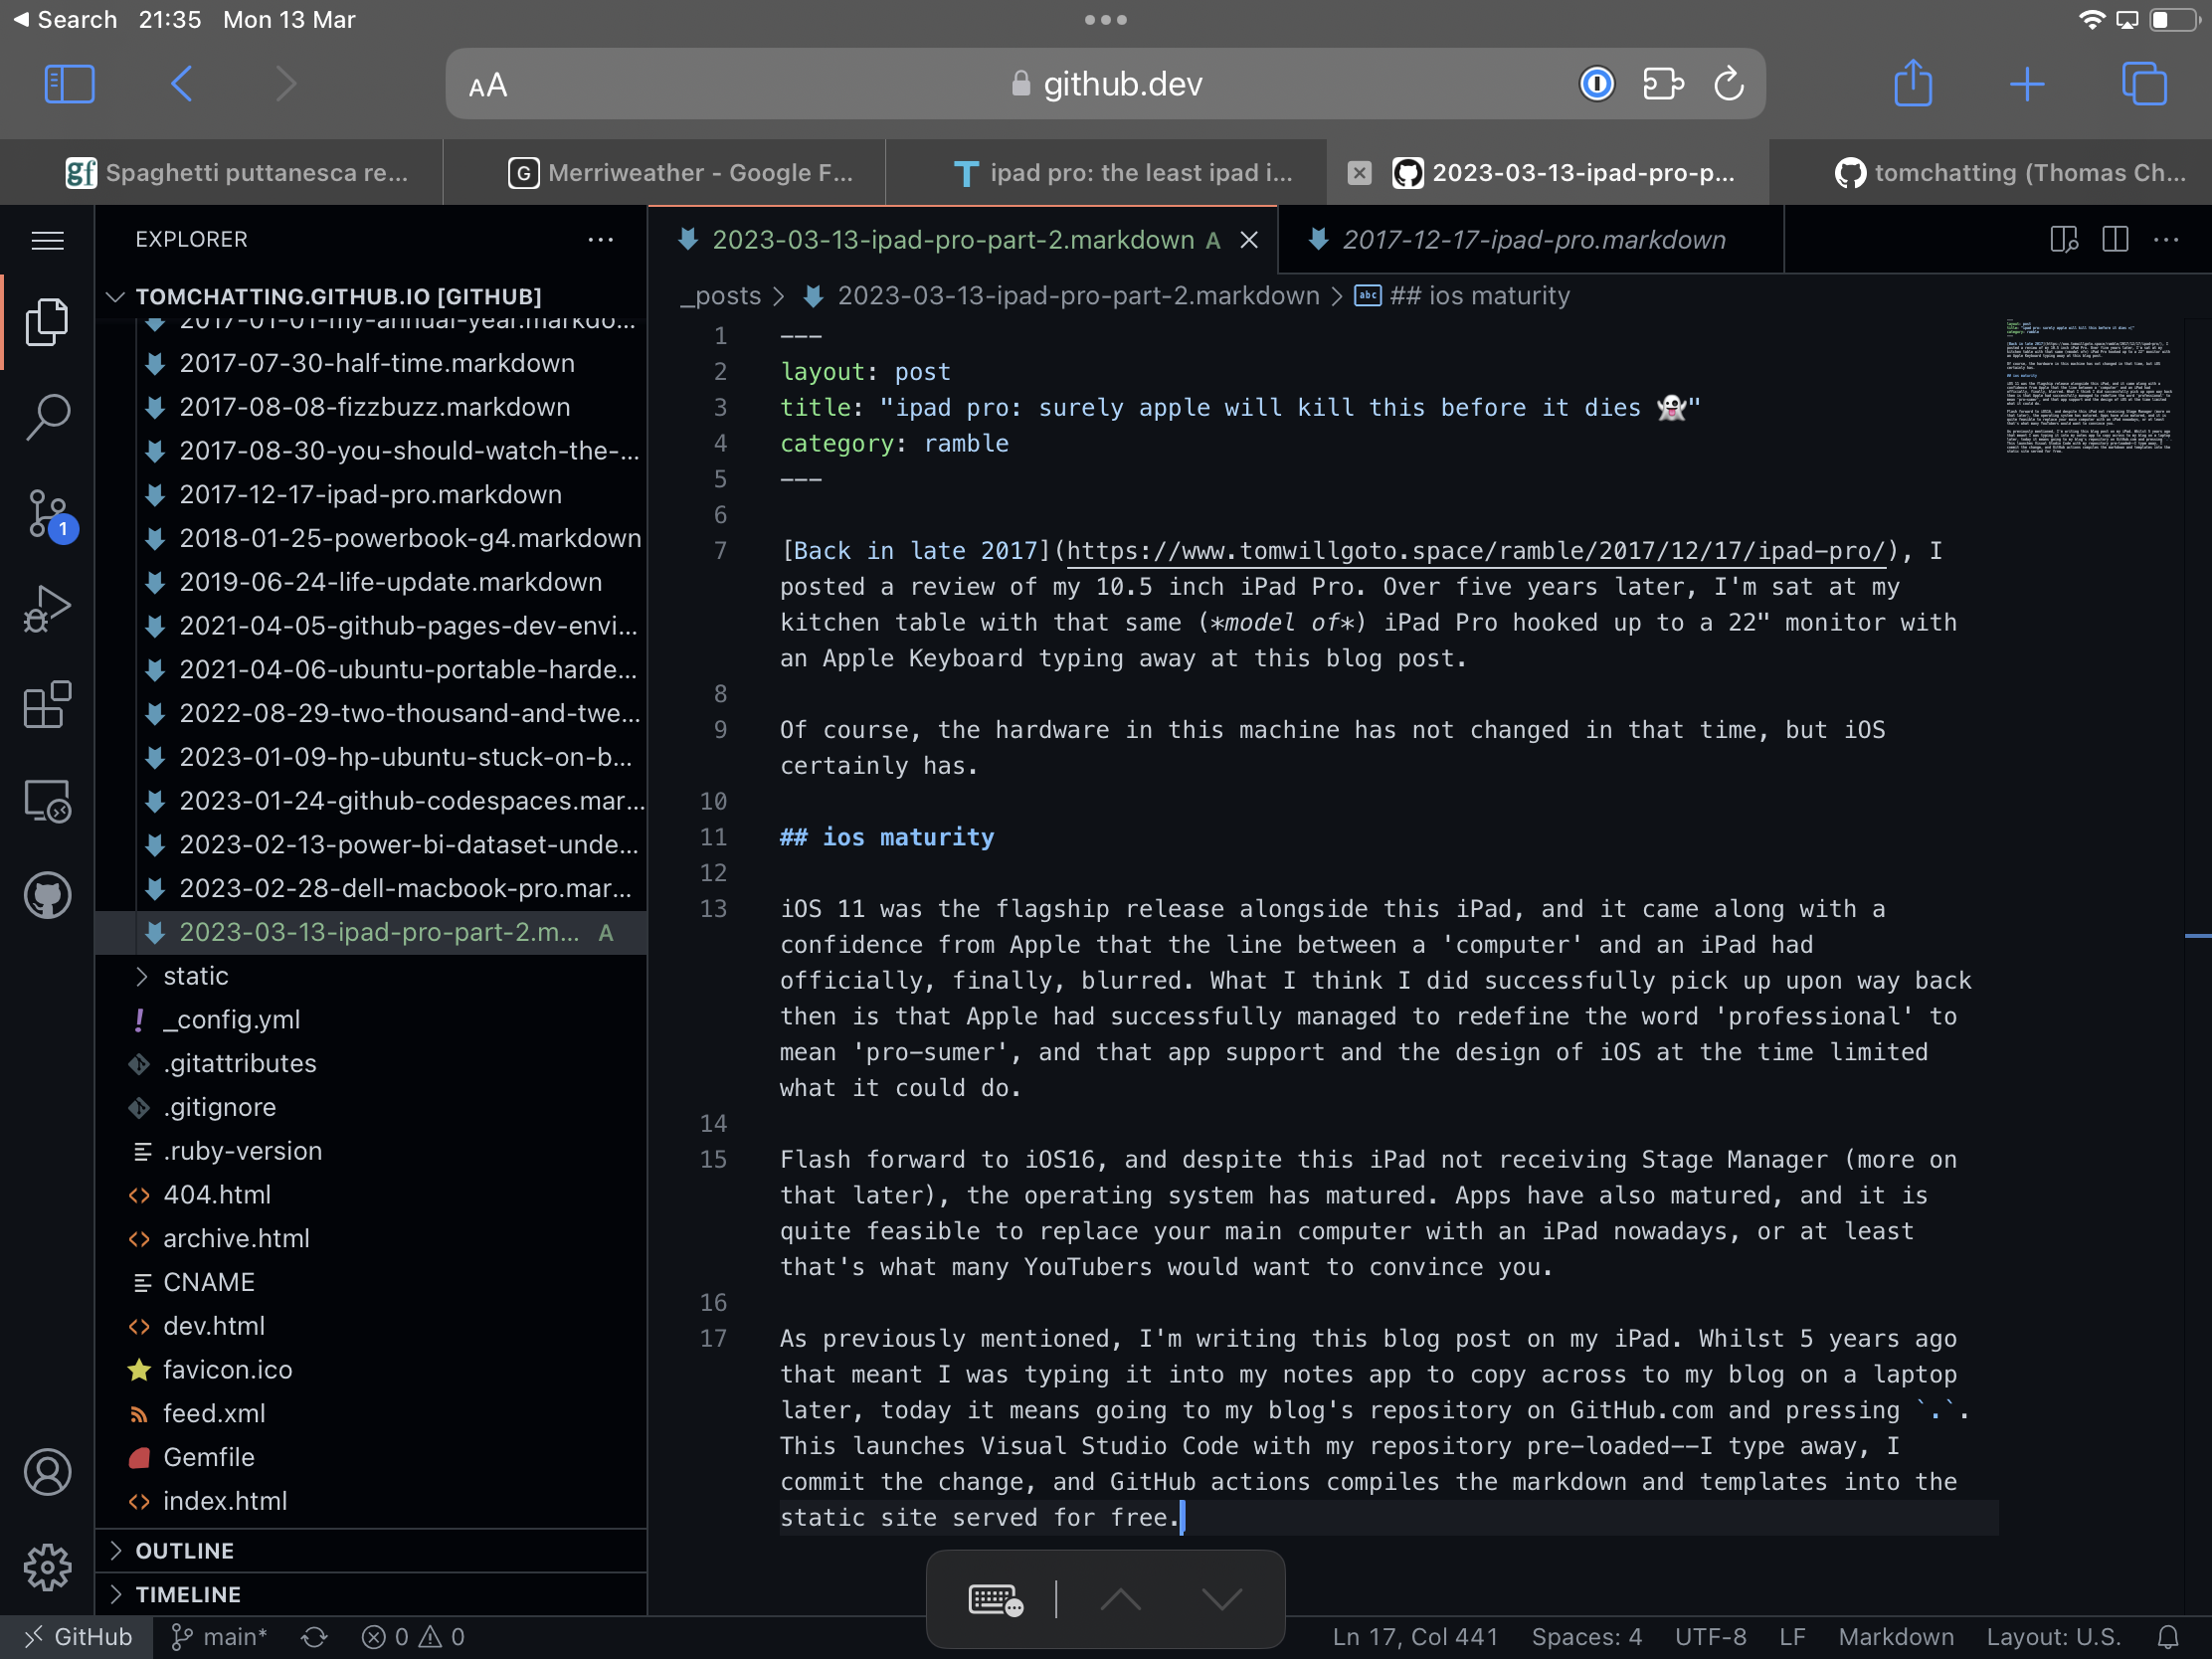 A screenshot from my iPad Pro of me writing this blog post in Visual Studio Code, in Safari